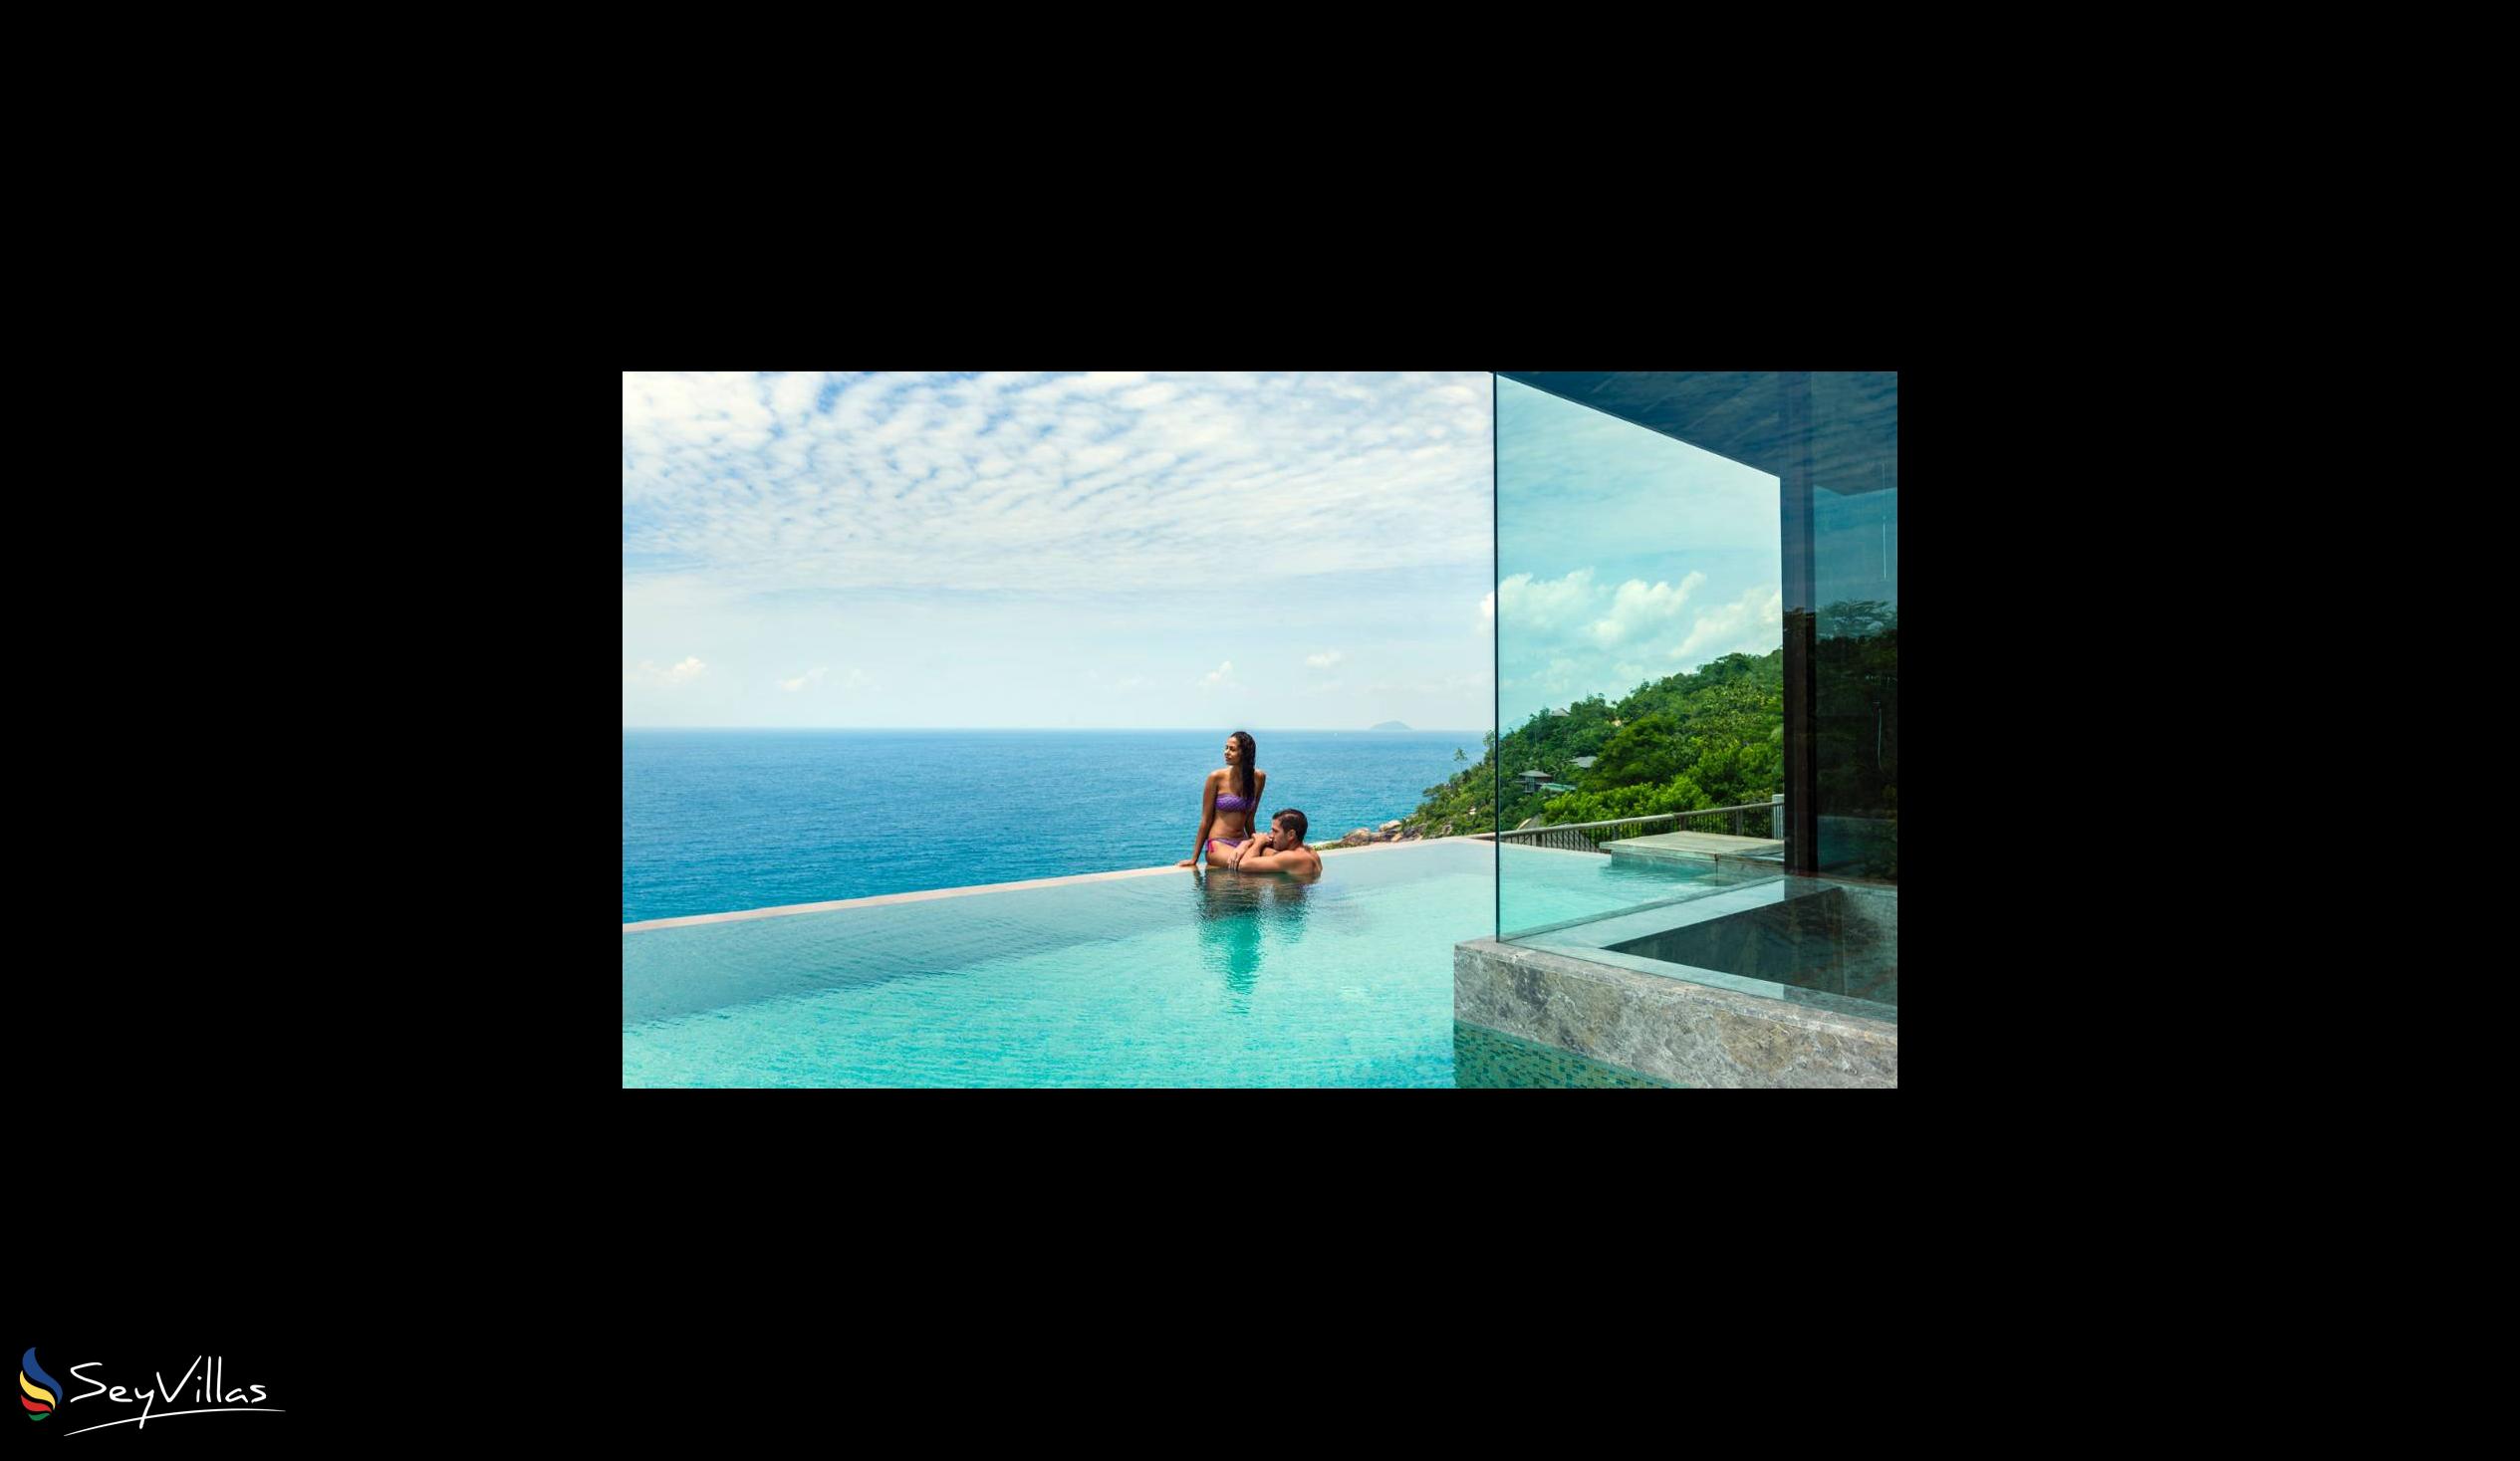 Photo 56: Four Seasons Resort - Serenity Villa - Mahé (Seychelles)